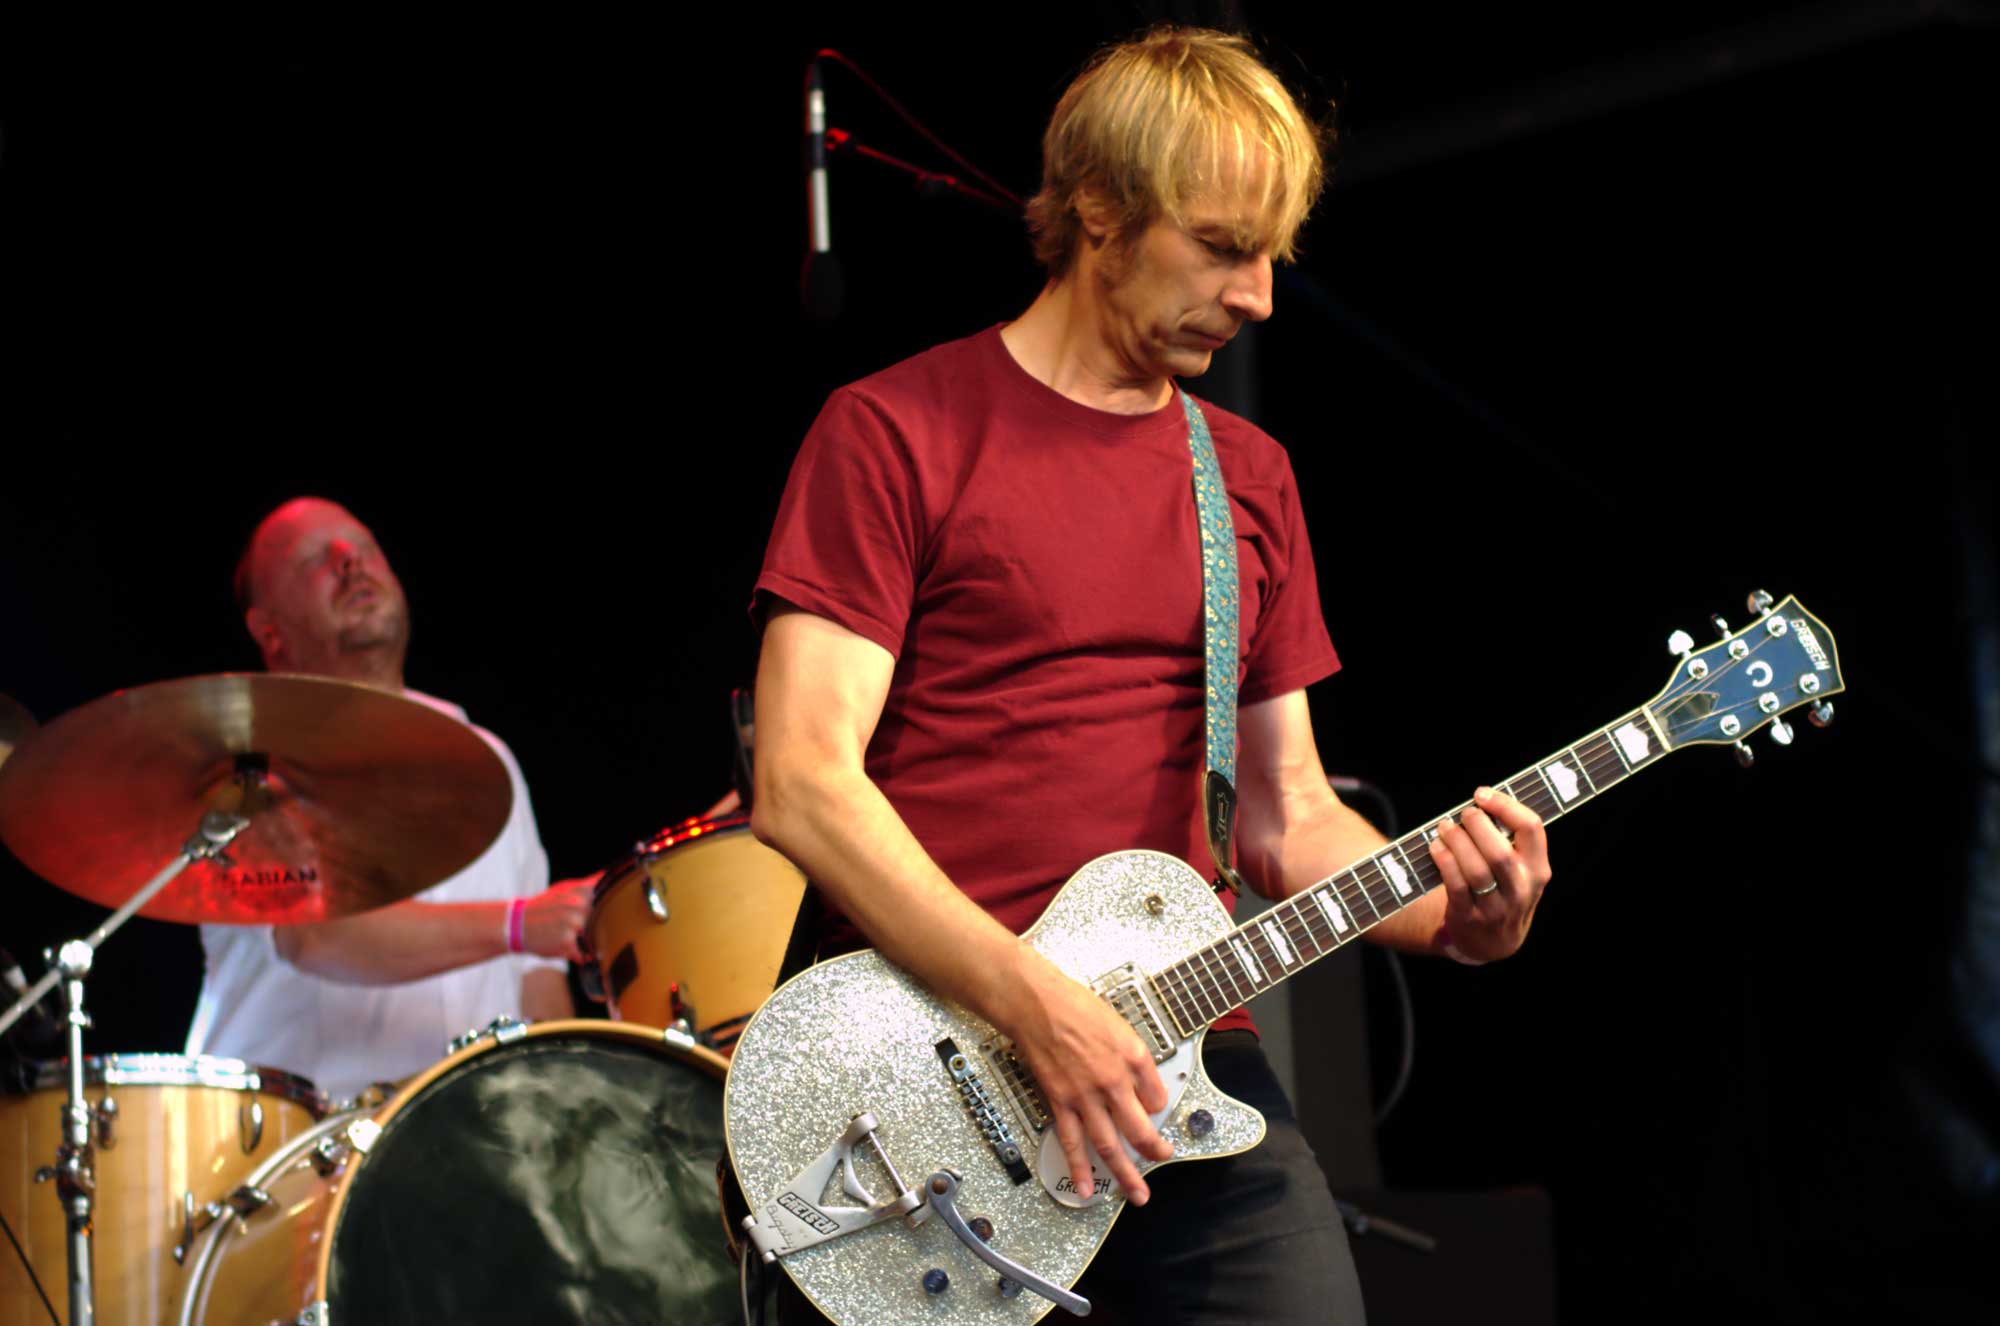 El grup nord-americà Mudhoney actuant al Festival Primavera Sound 2016 a la plaça Joan Coromines